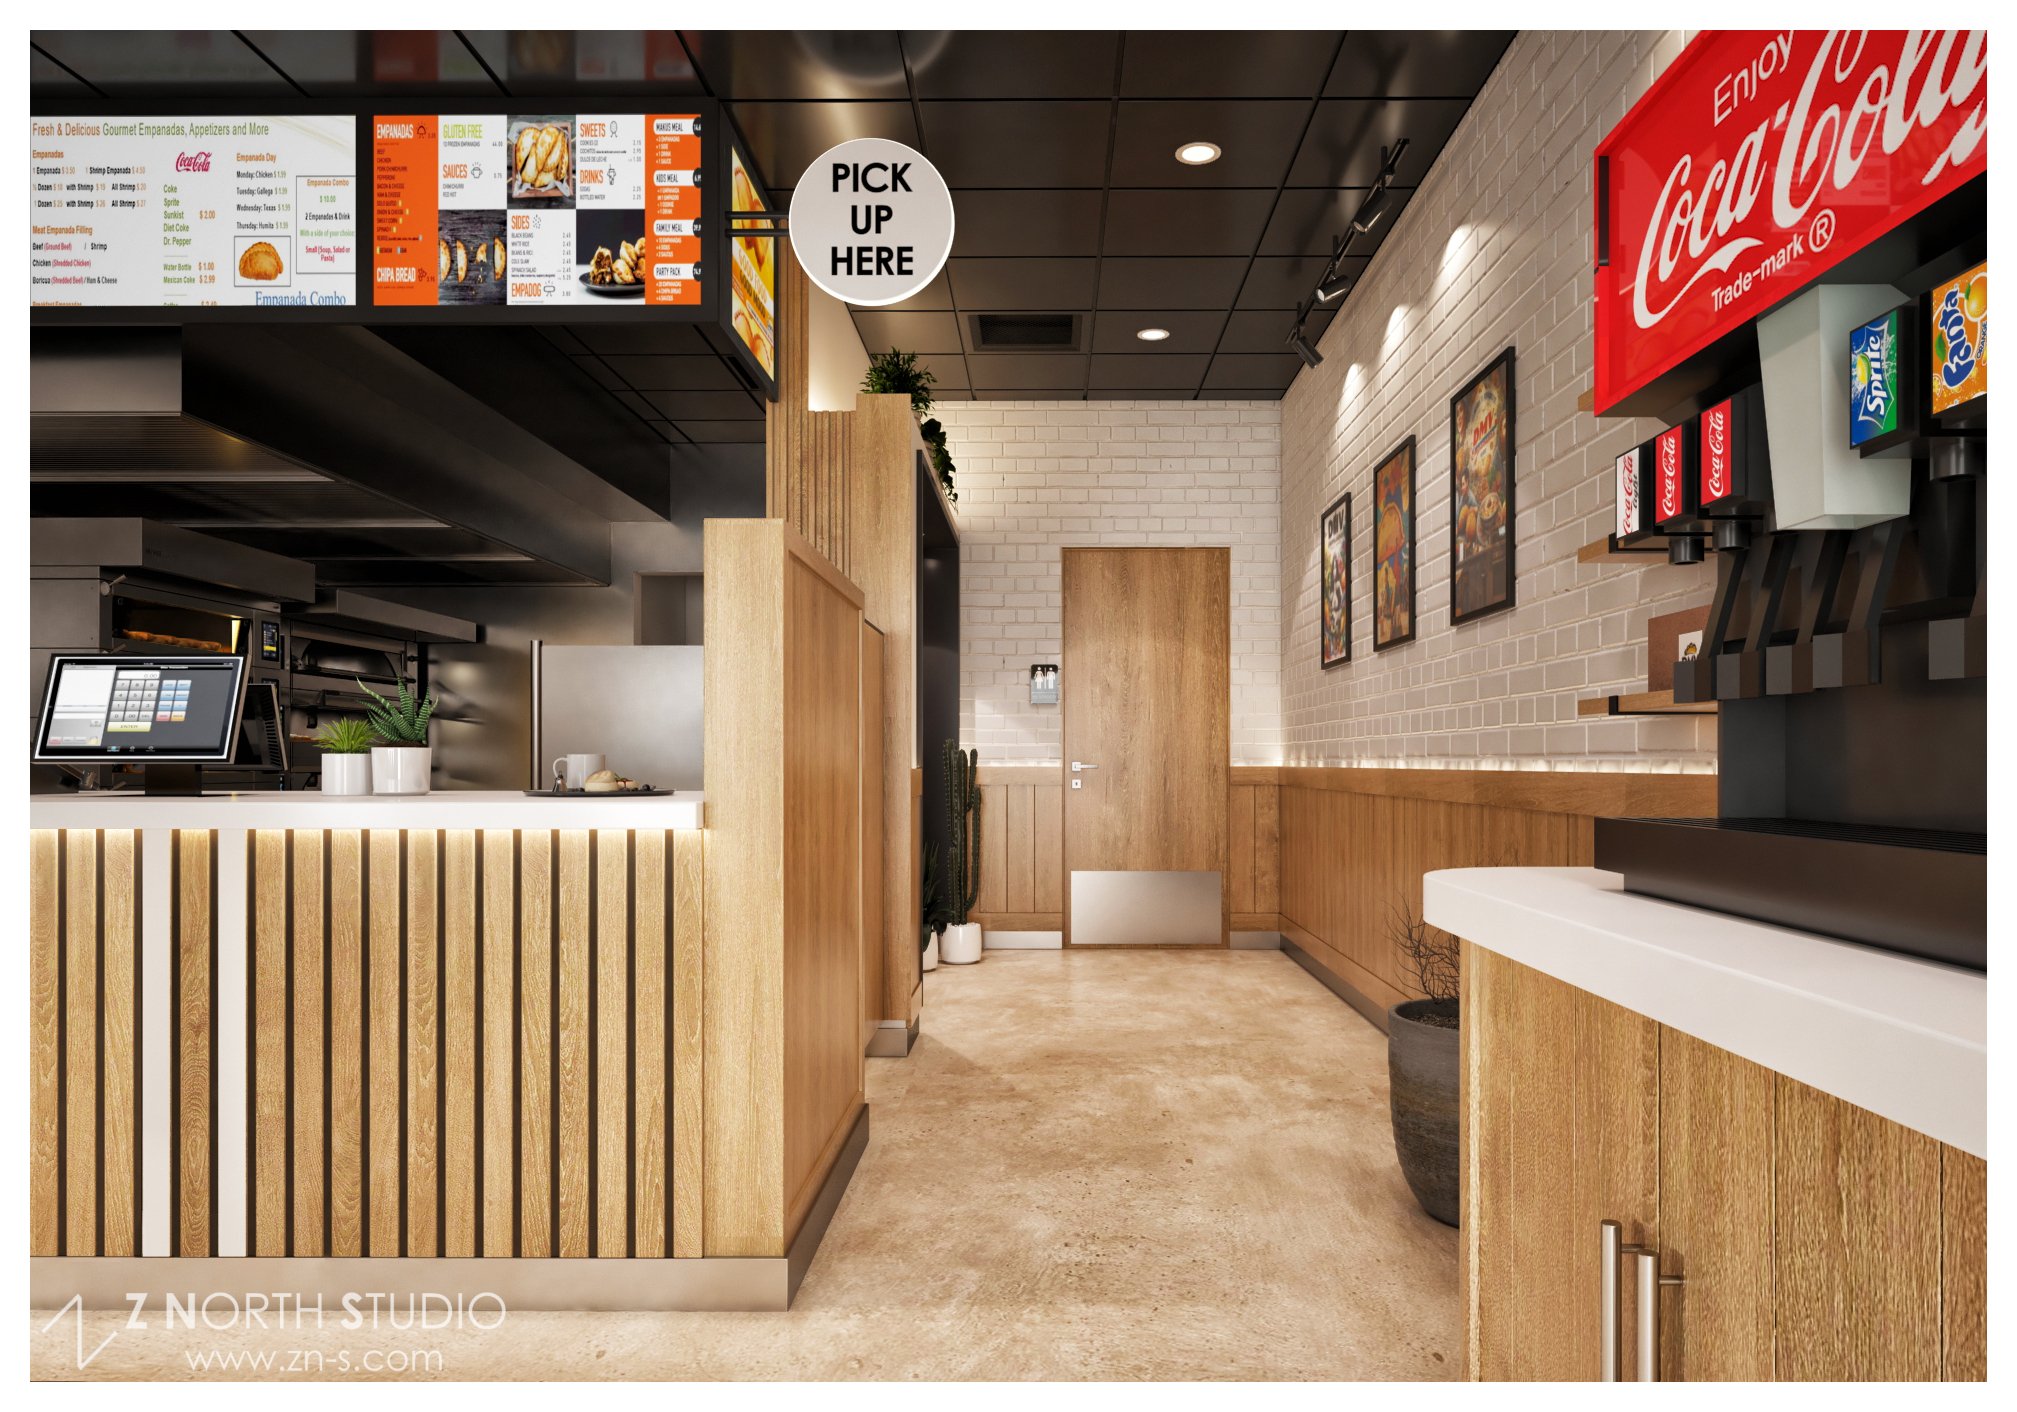 DMV Empanadas - Restaurant Interior Design - Z North Studio (3).jpg